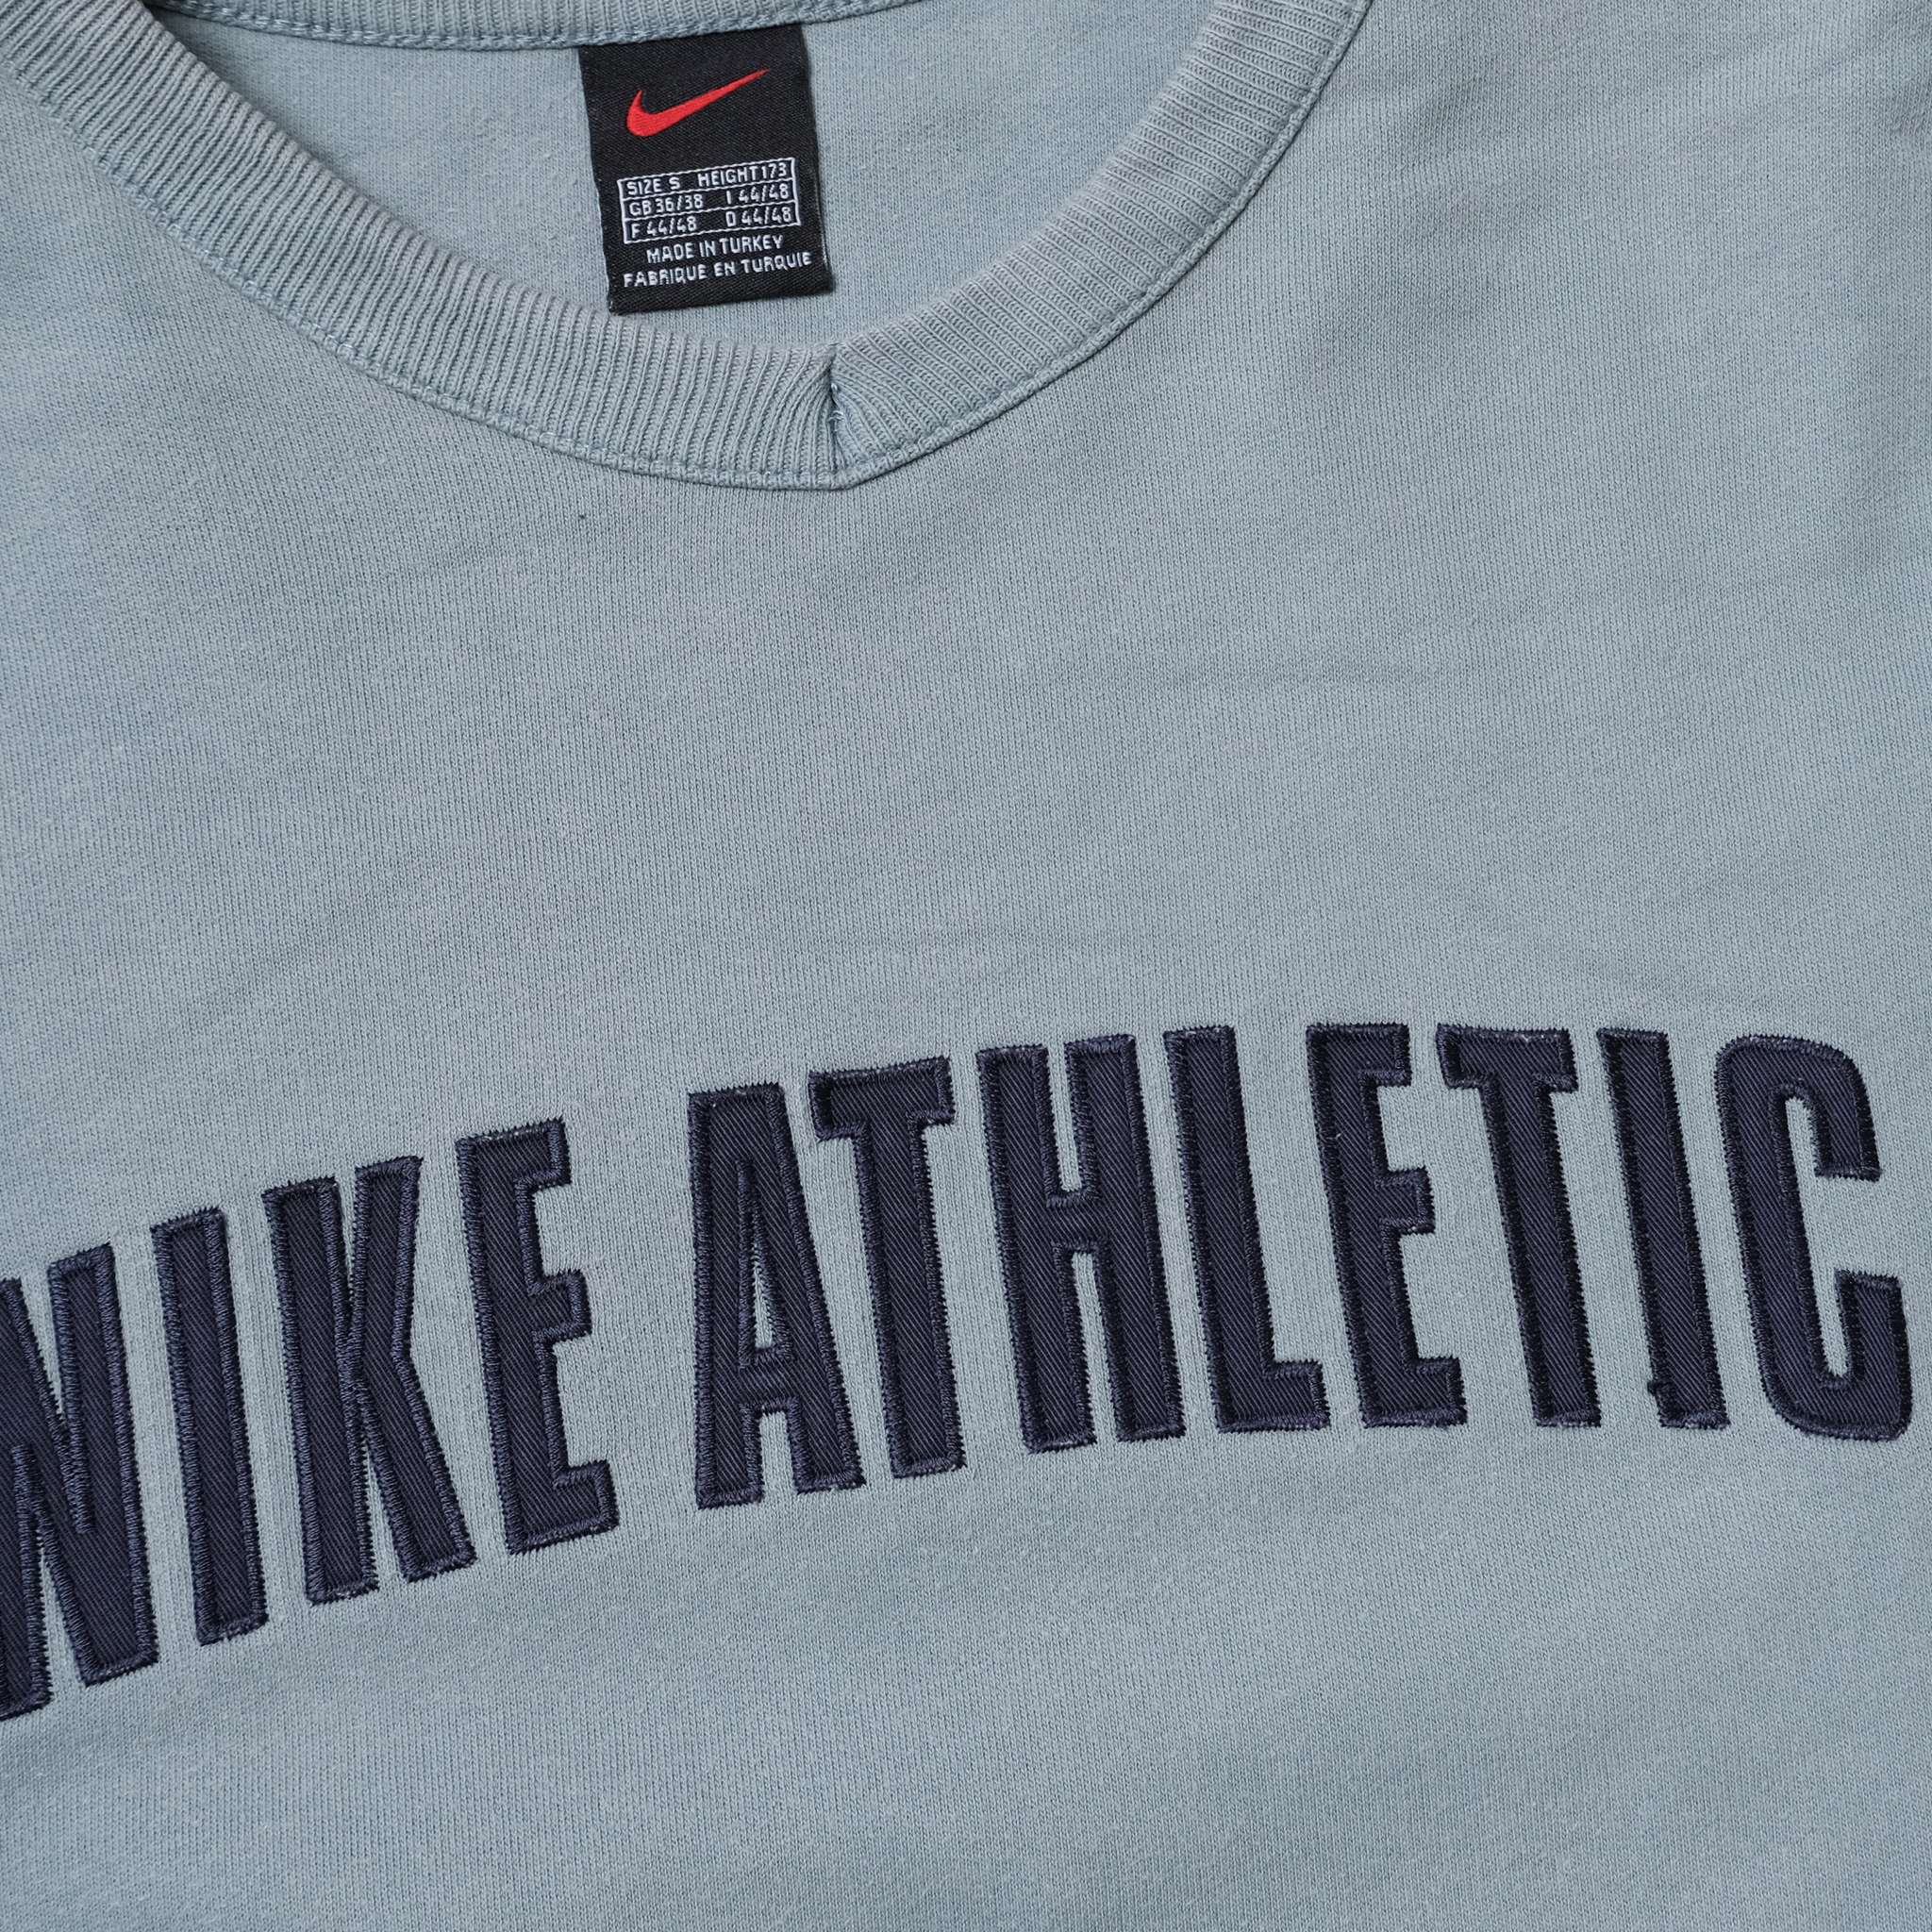 vintage nike athletic sweatshirt